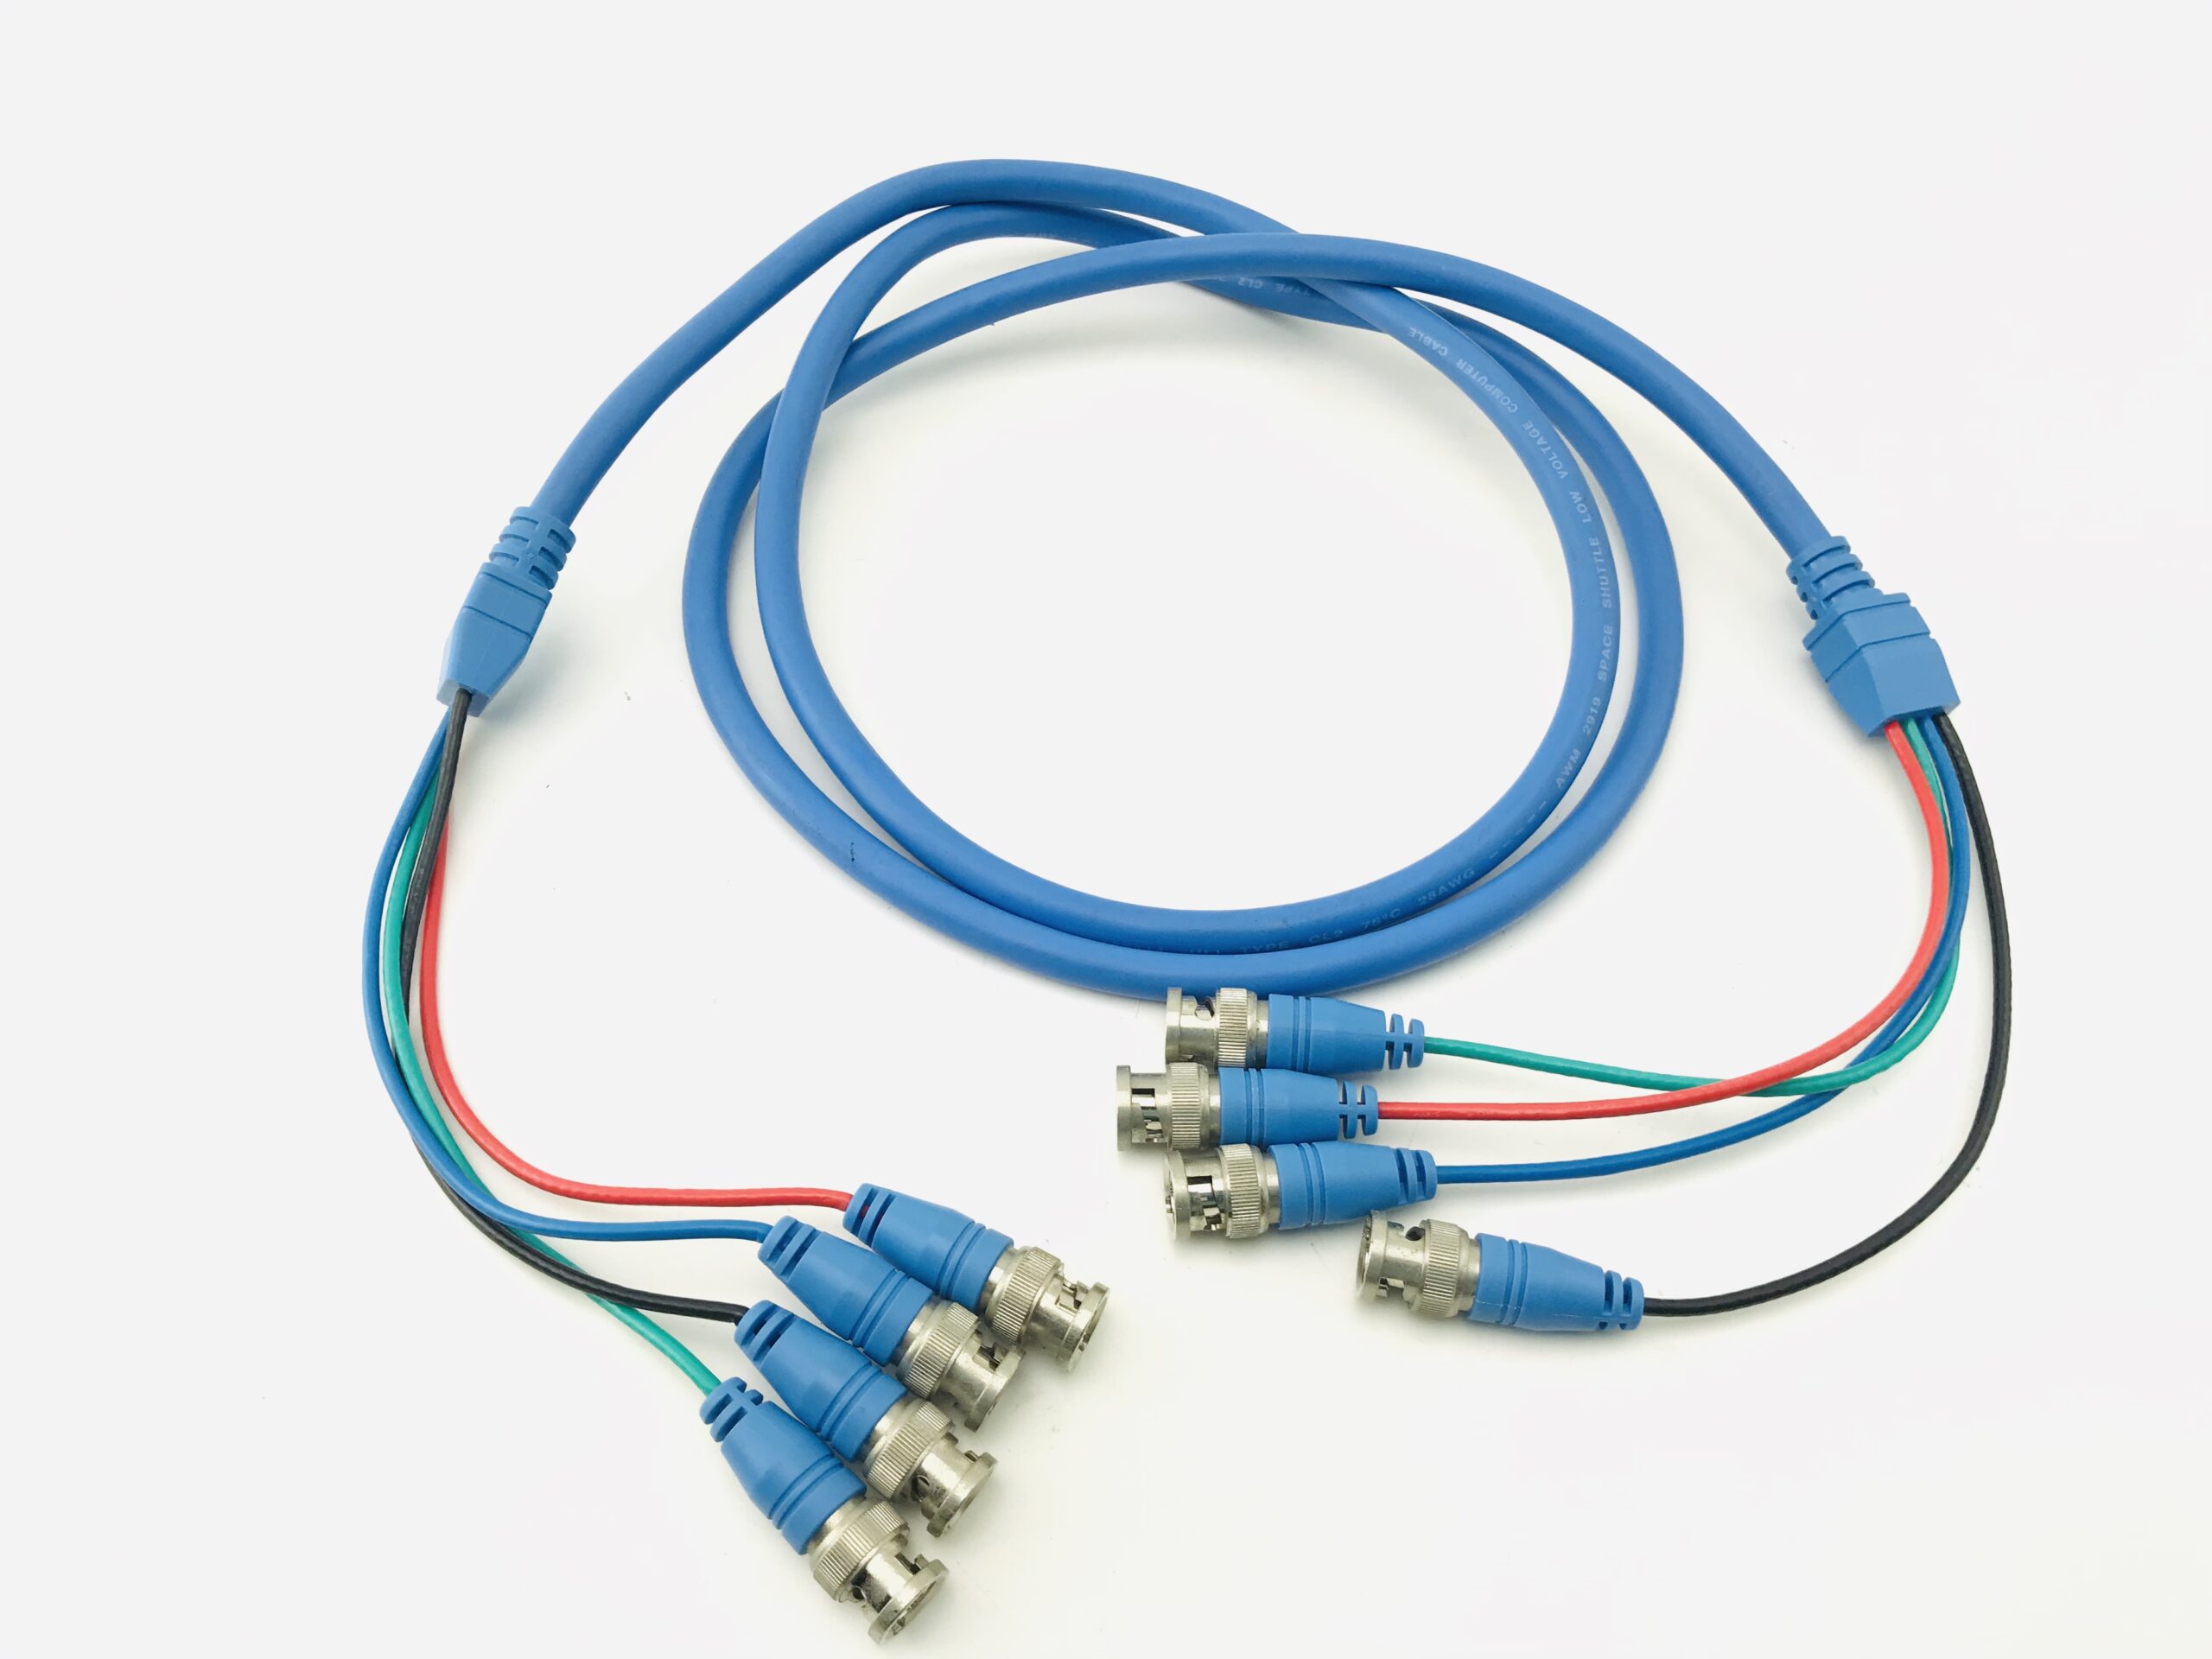 AWM 2919 (E120414) Low Voltage Computer Cable- 4 BNC Male Connectors